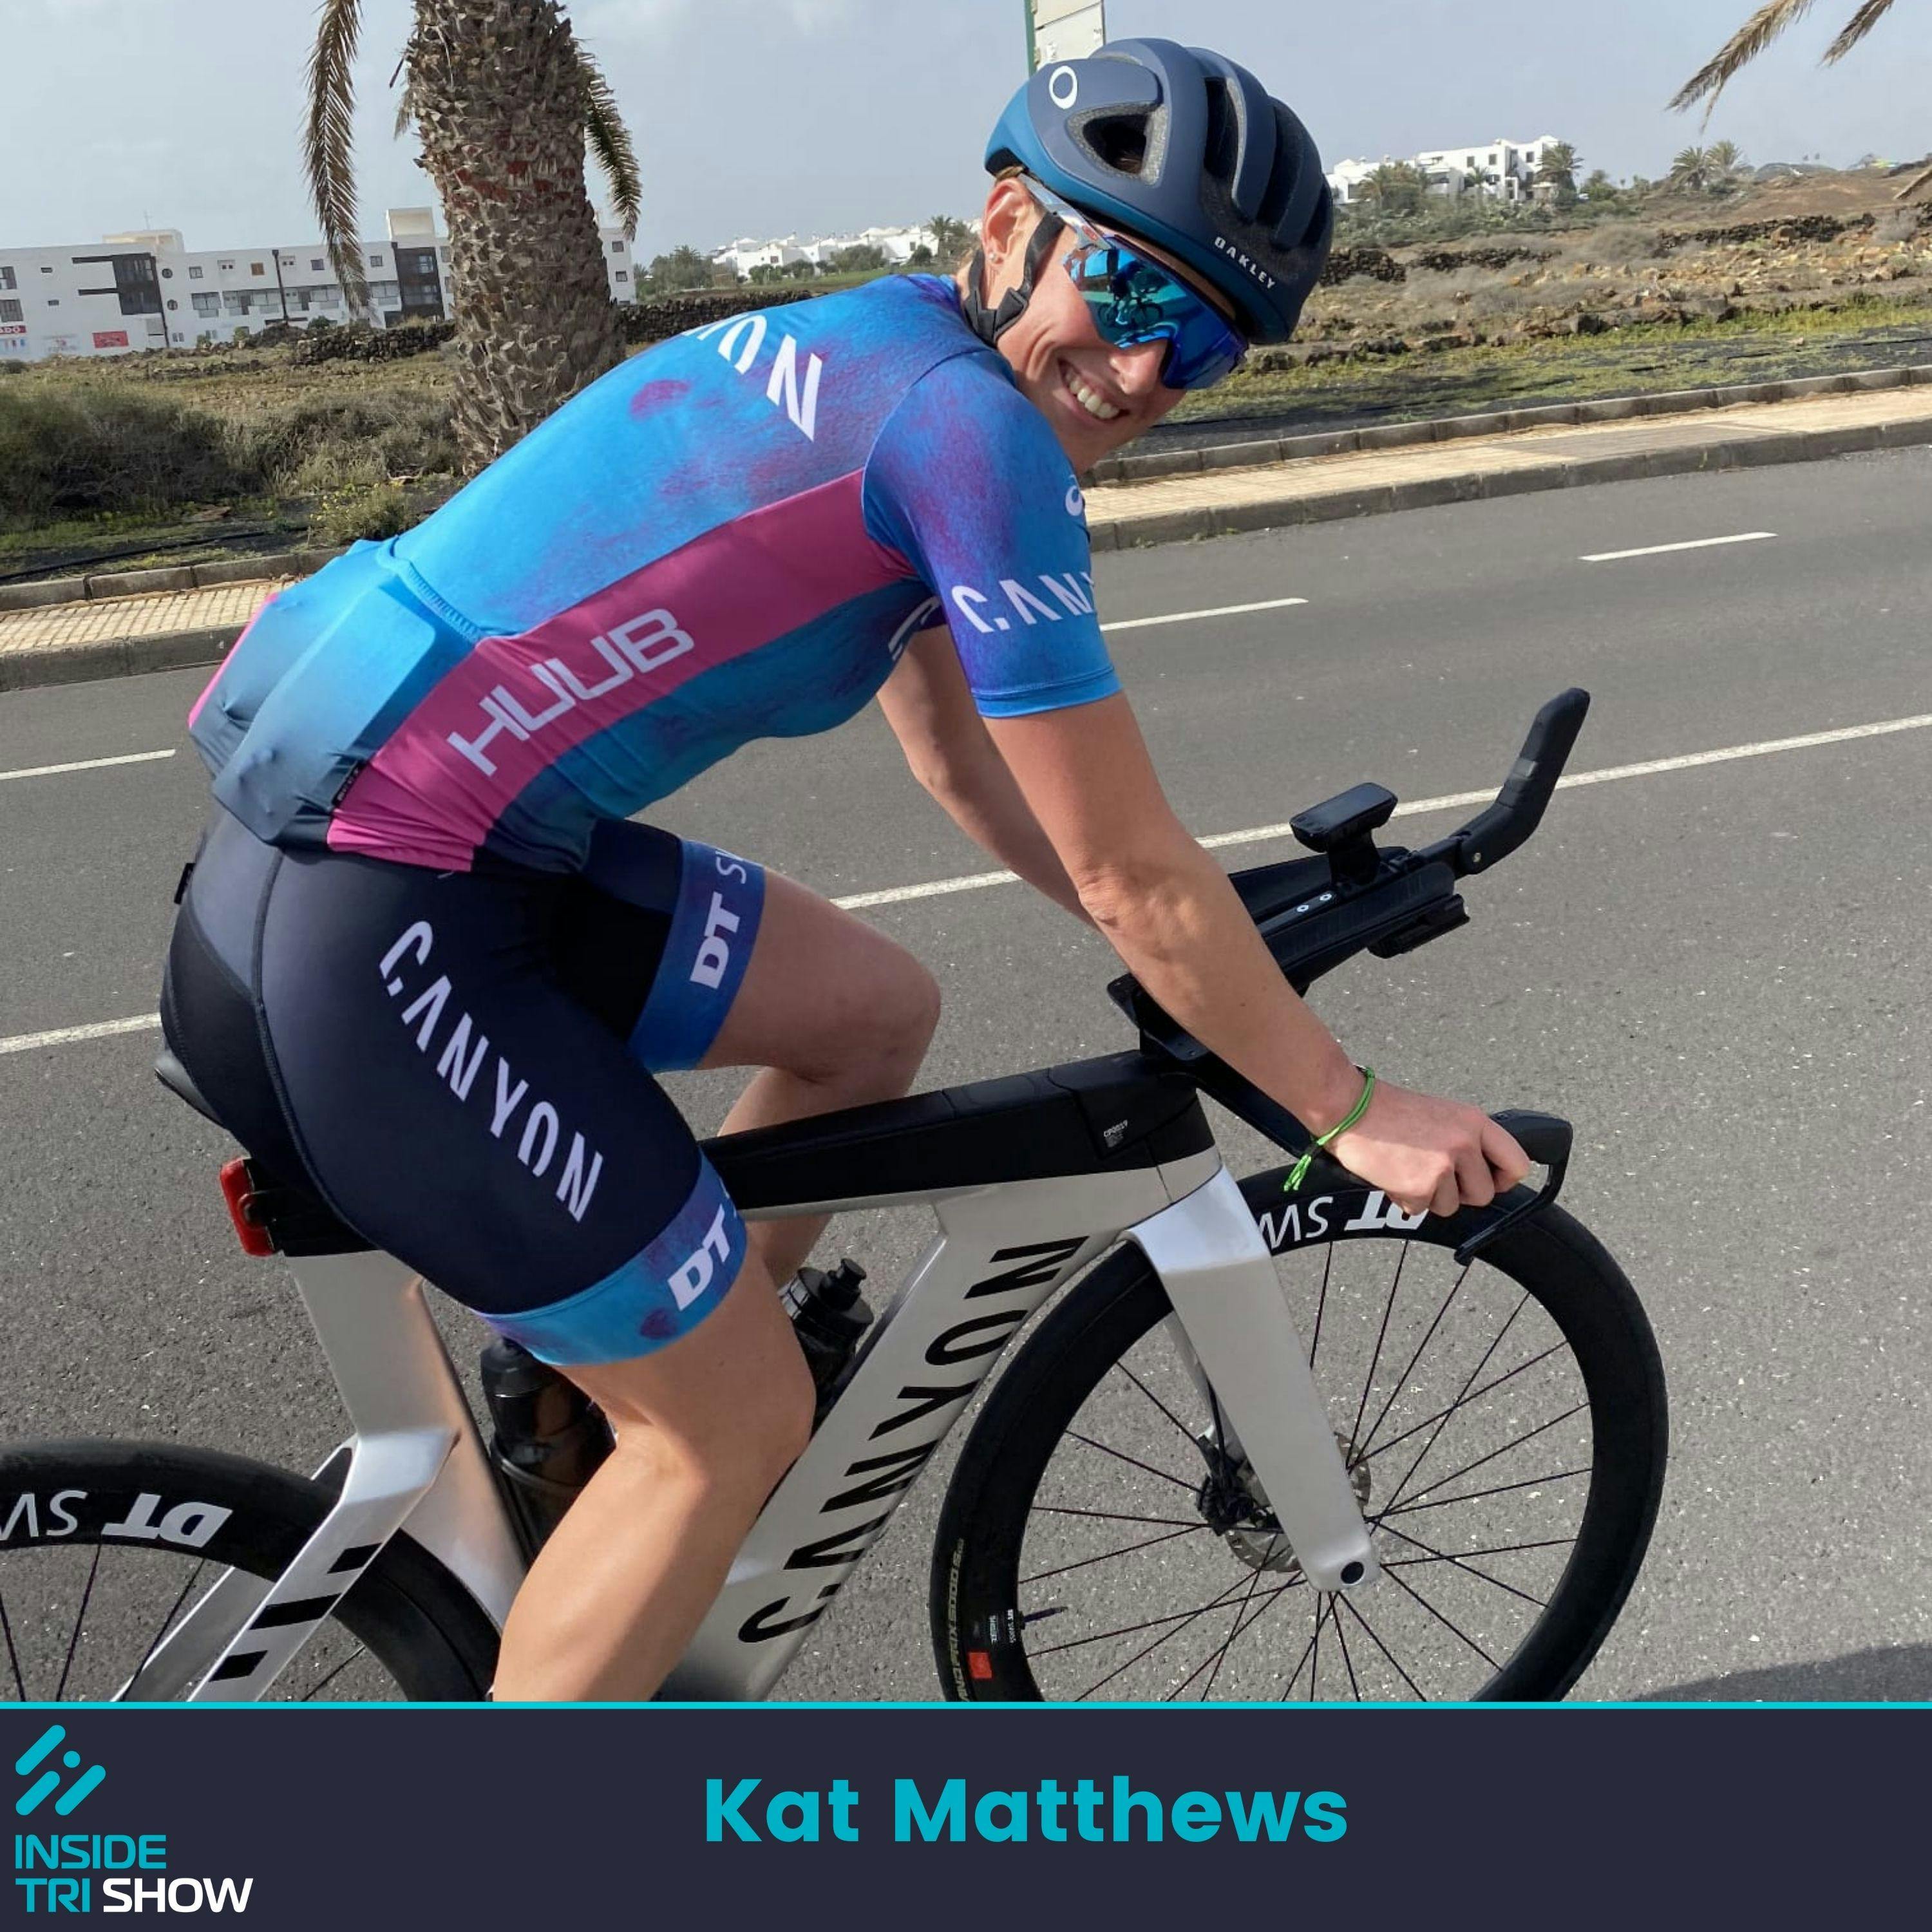 Kat Matthews: Control your own decisions